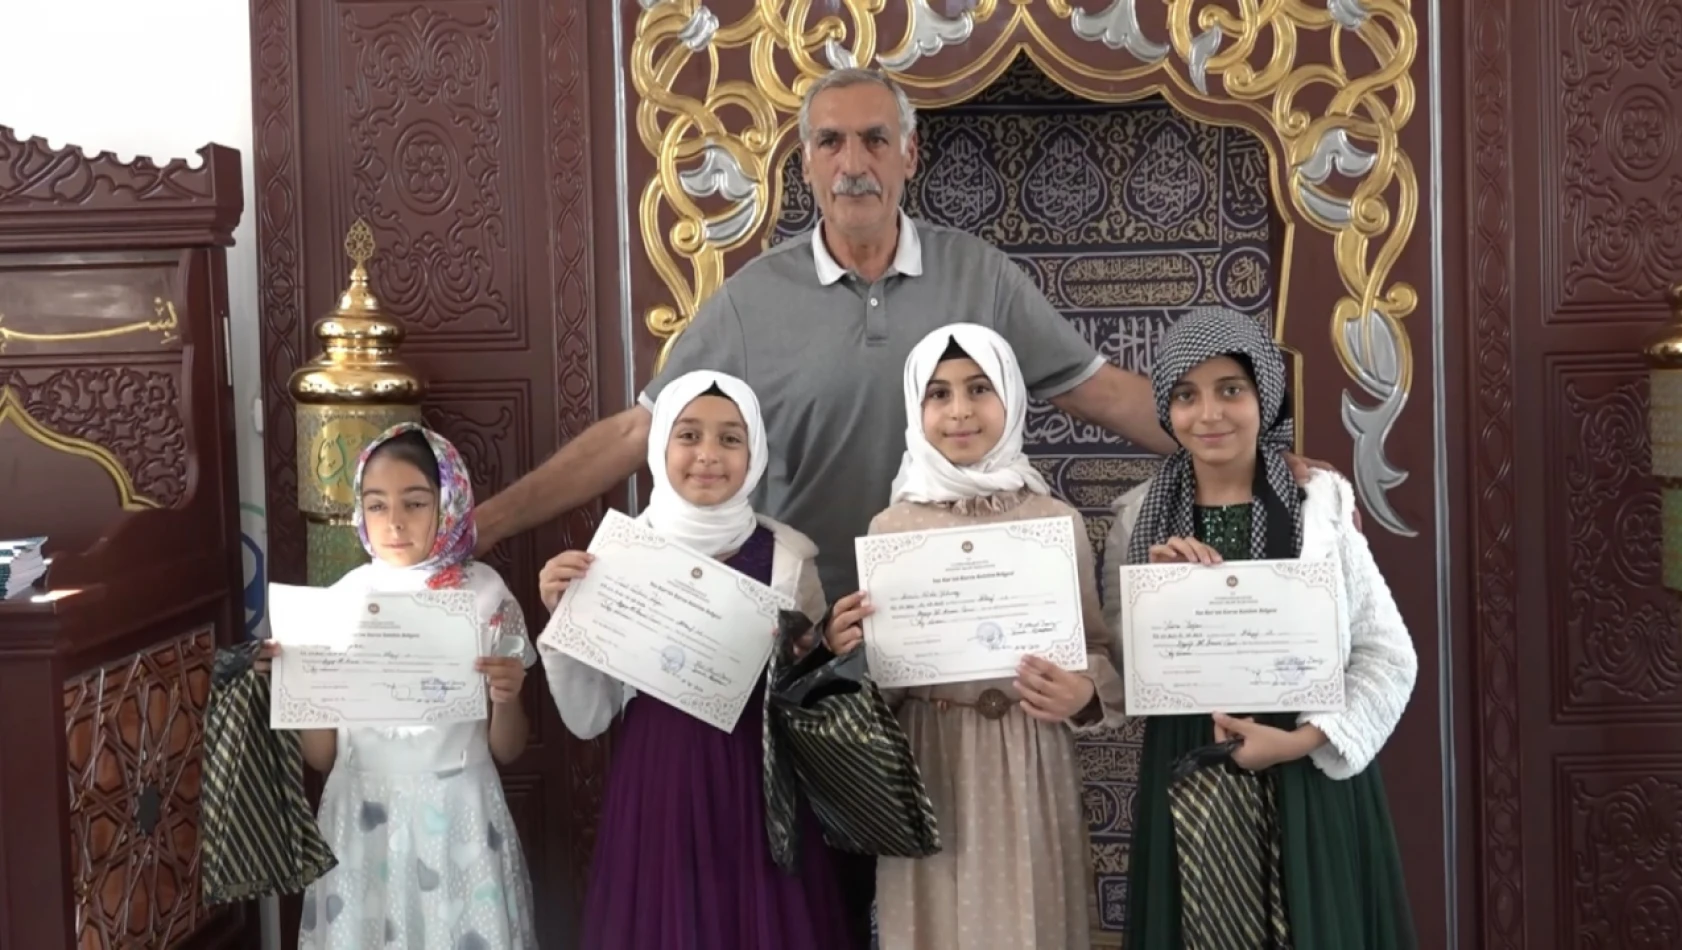 Yaz Kur'an Kursu sertifika töreni düzenlendi